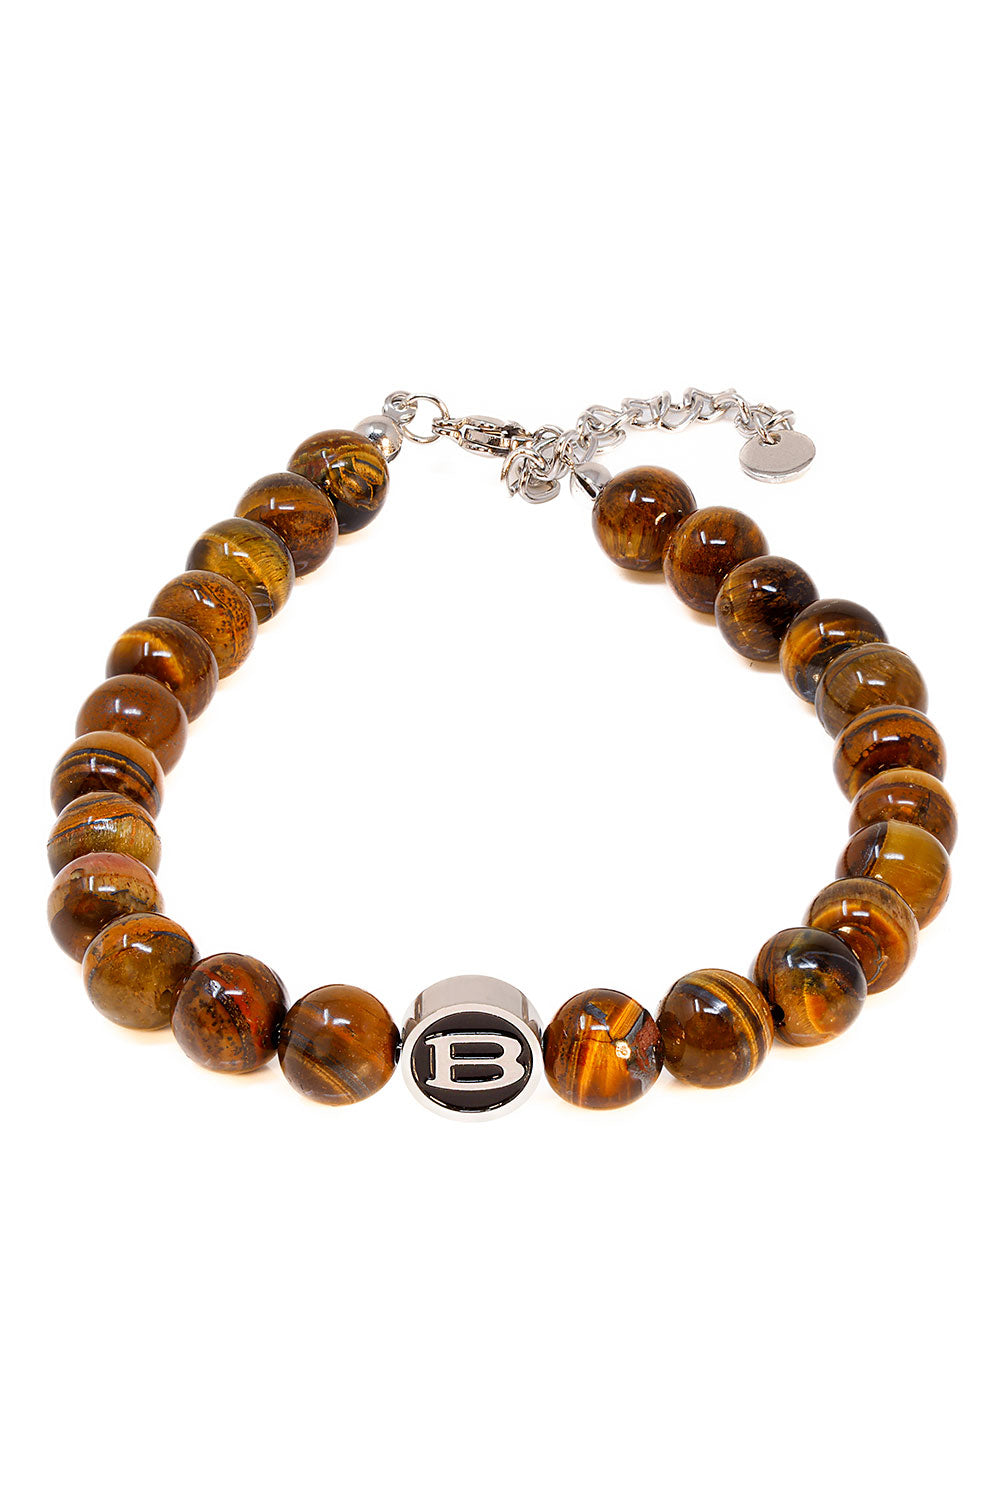 Barabas Unisex Tiger Eyes Beaded Bangles Bracelets 4BB12 Brown